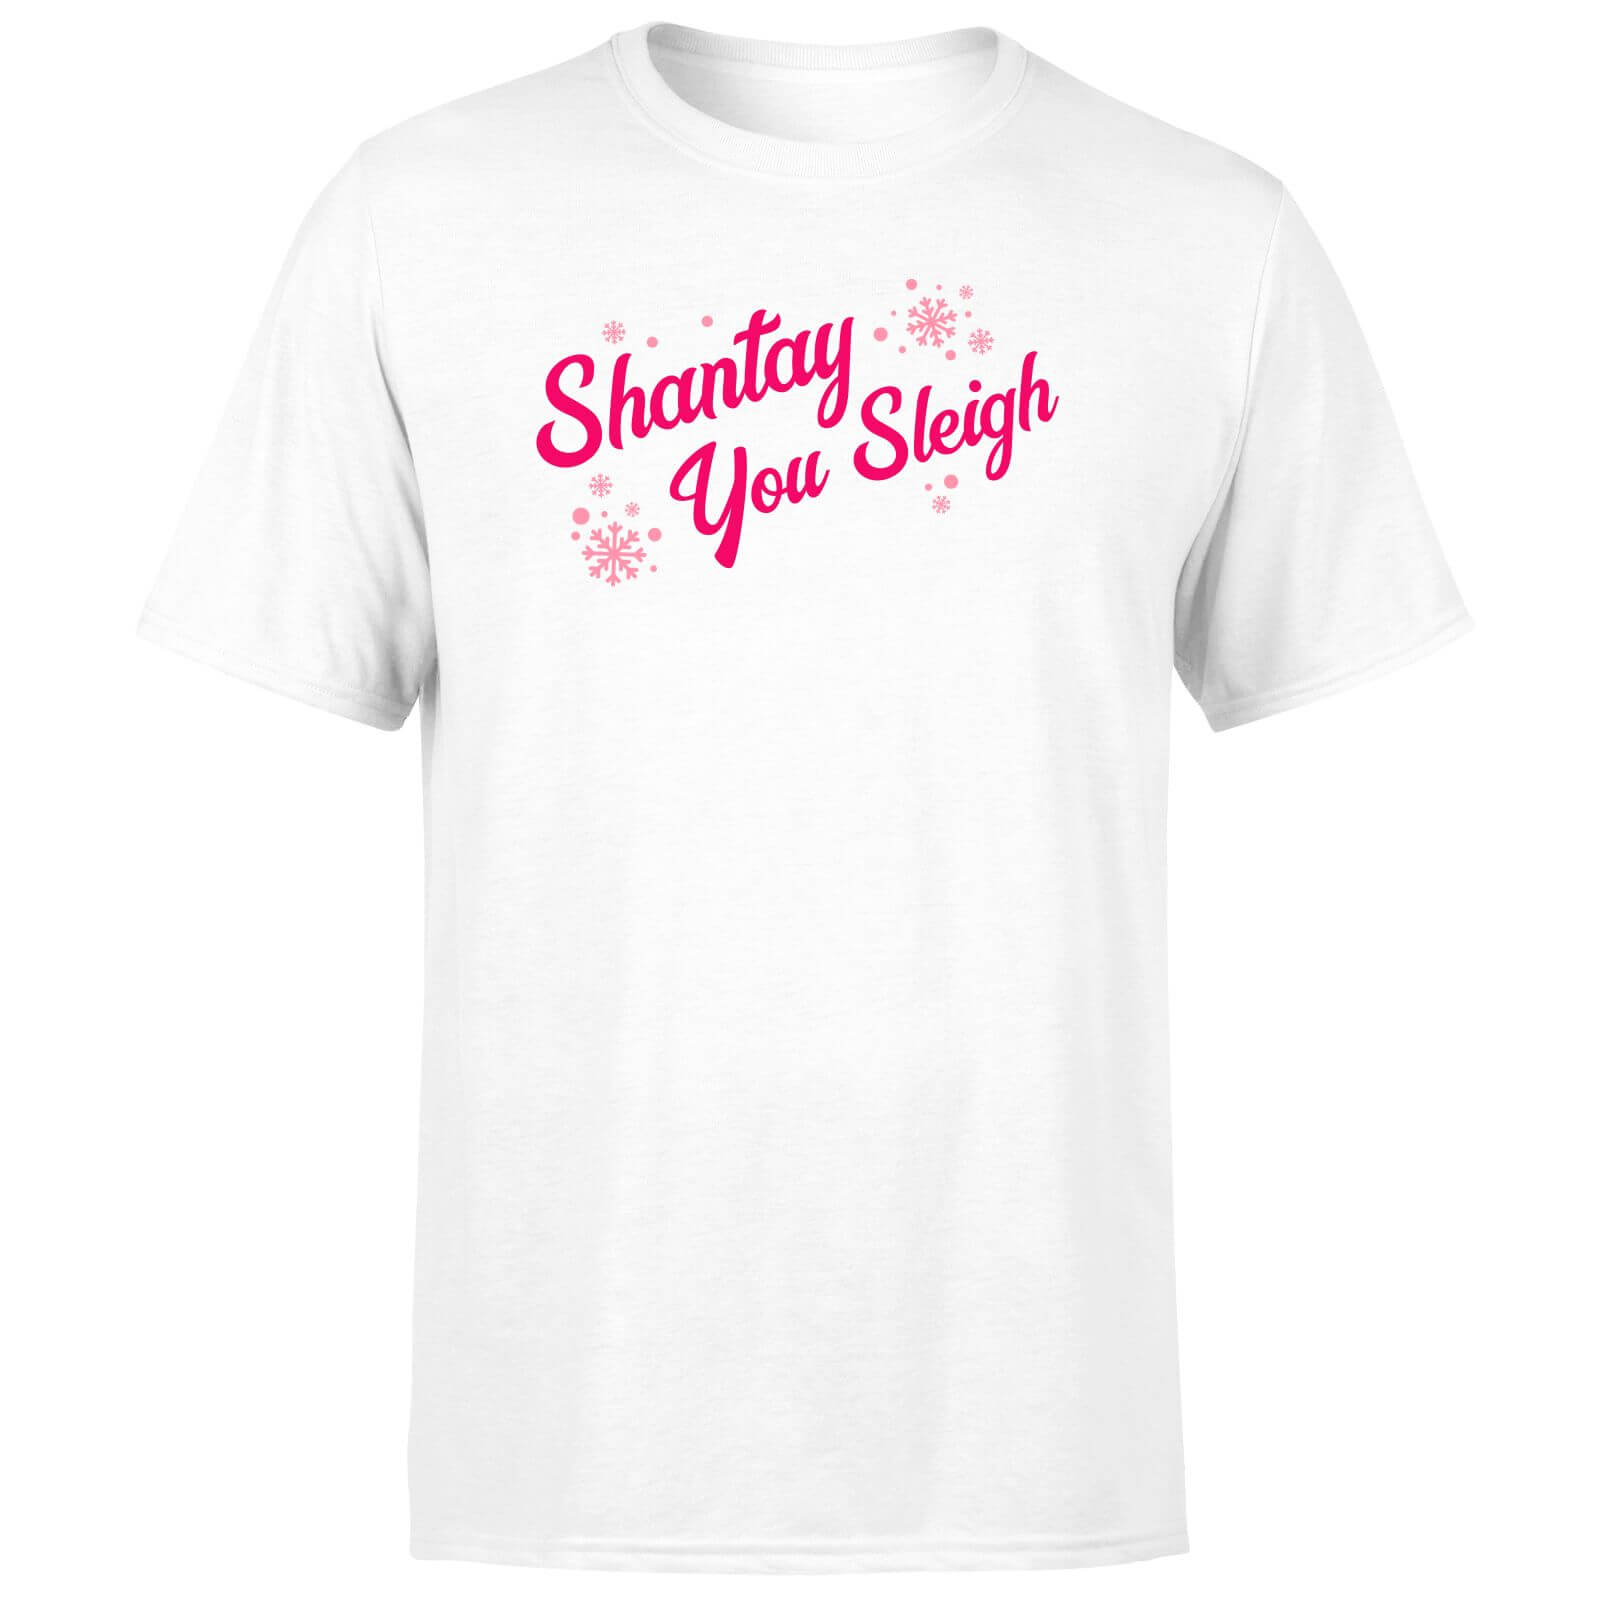 Snowy Shantay You Sleigh Men's T-Shirt - White - XS - White